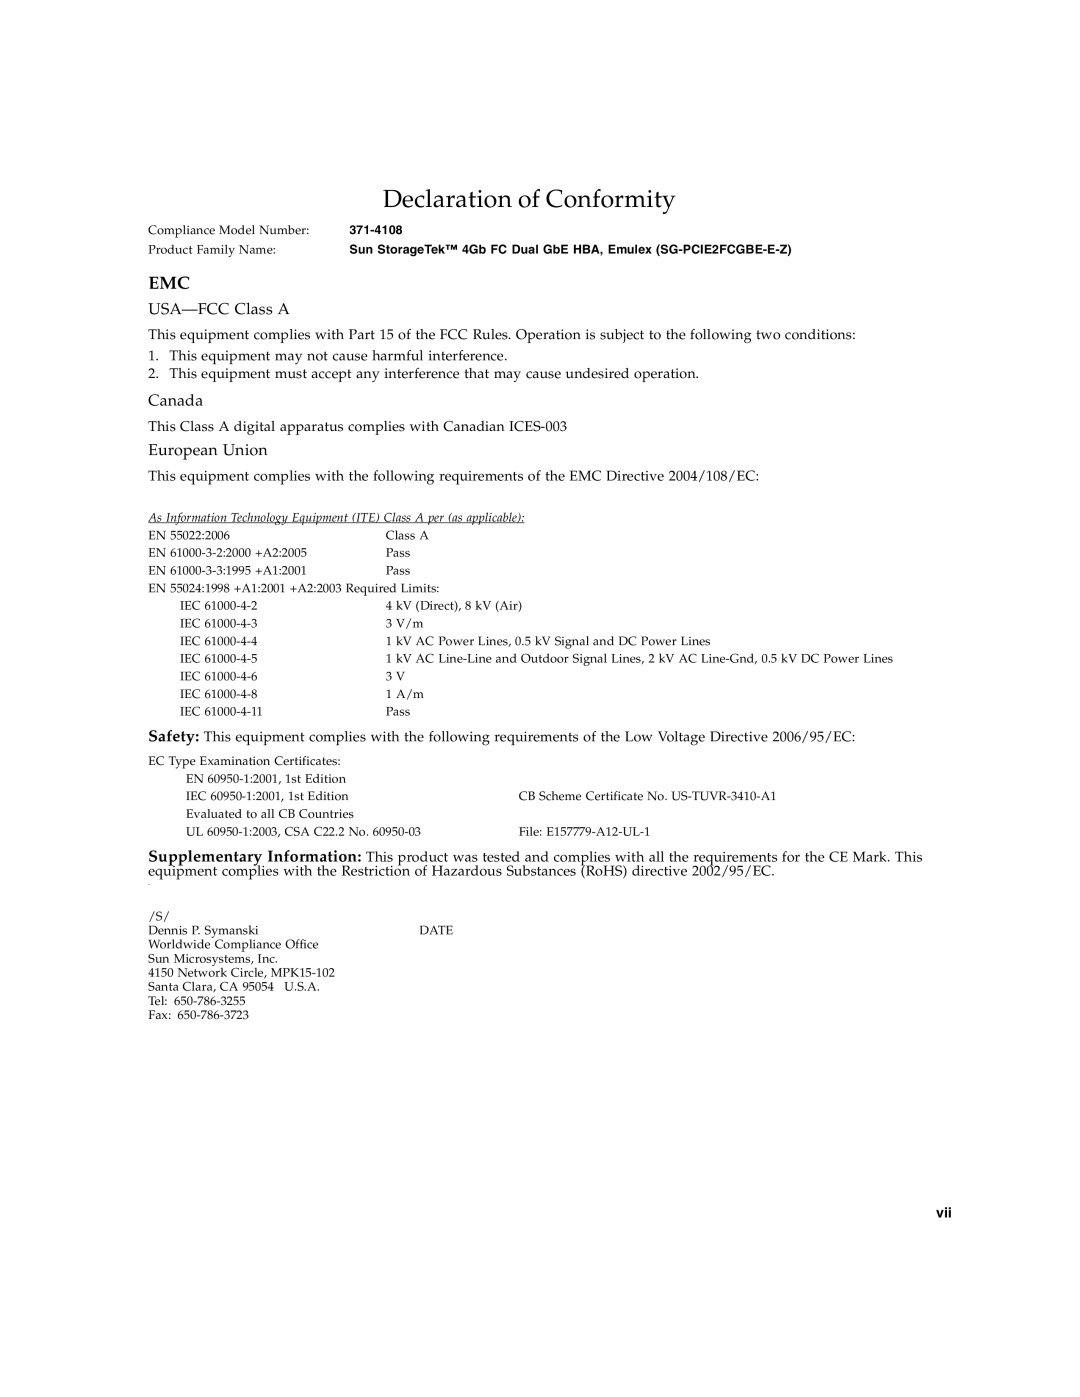 Sun Microsystems SG-XPCIE2FCGBE-E-Z manual Declaration of Conformity, USA-FCC Class A, Canada, European Union 